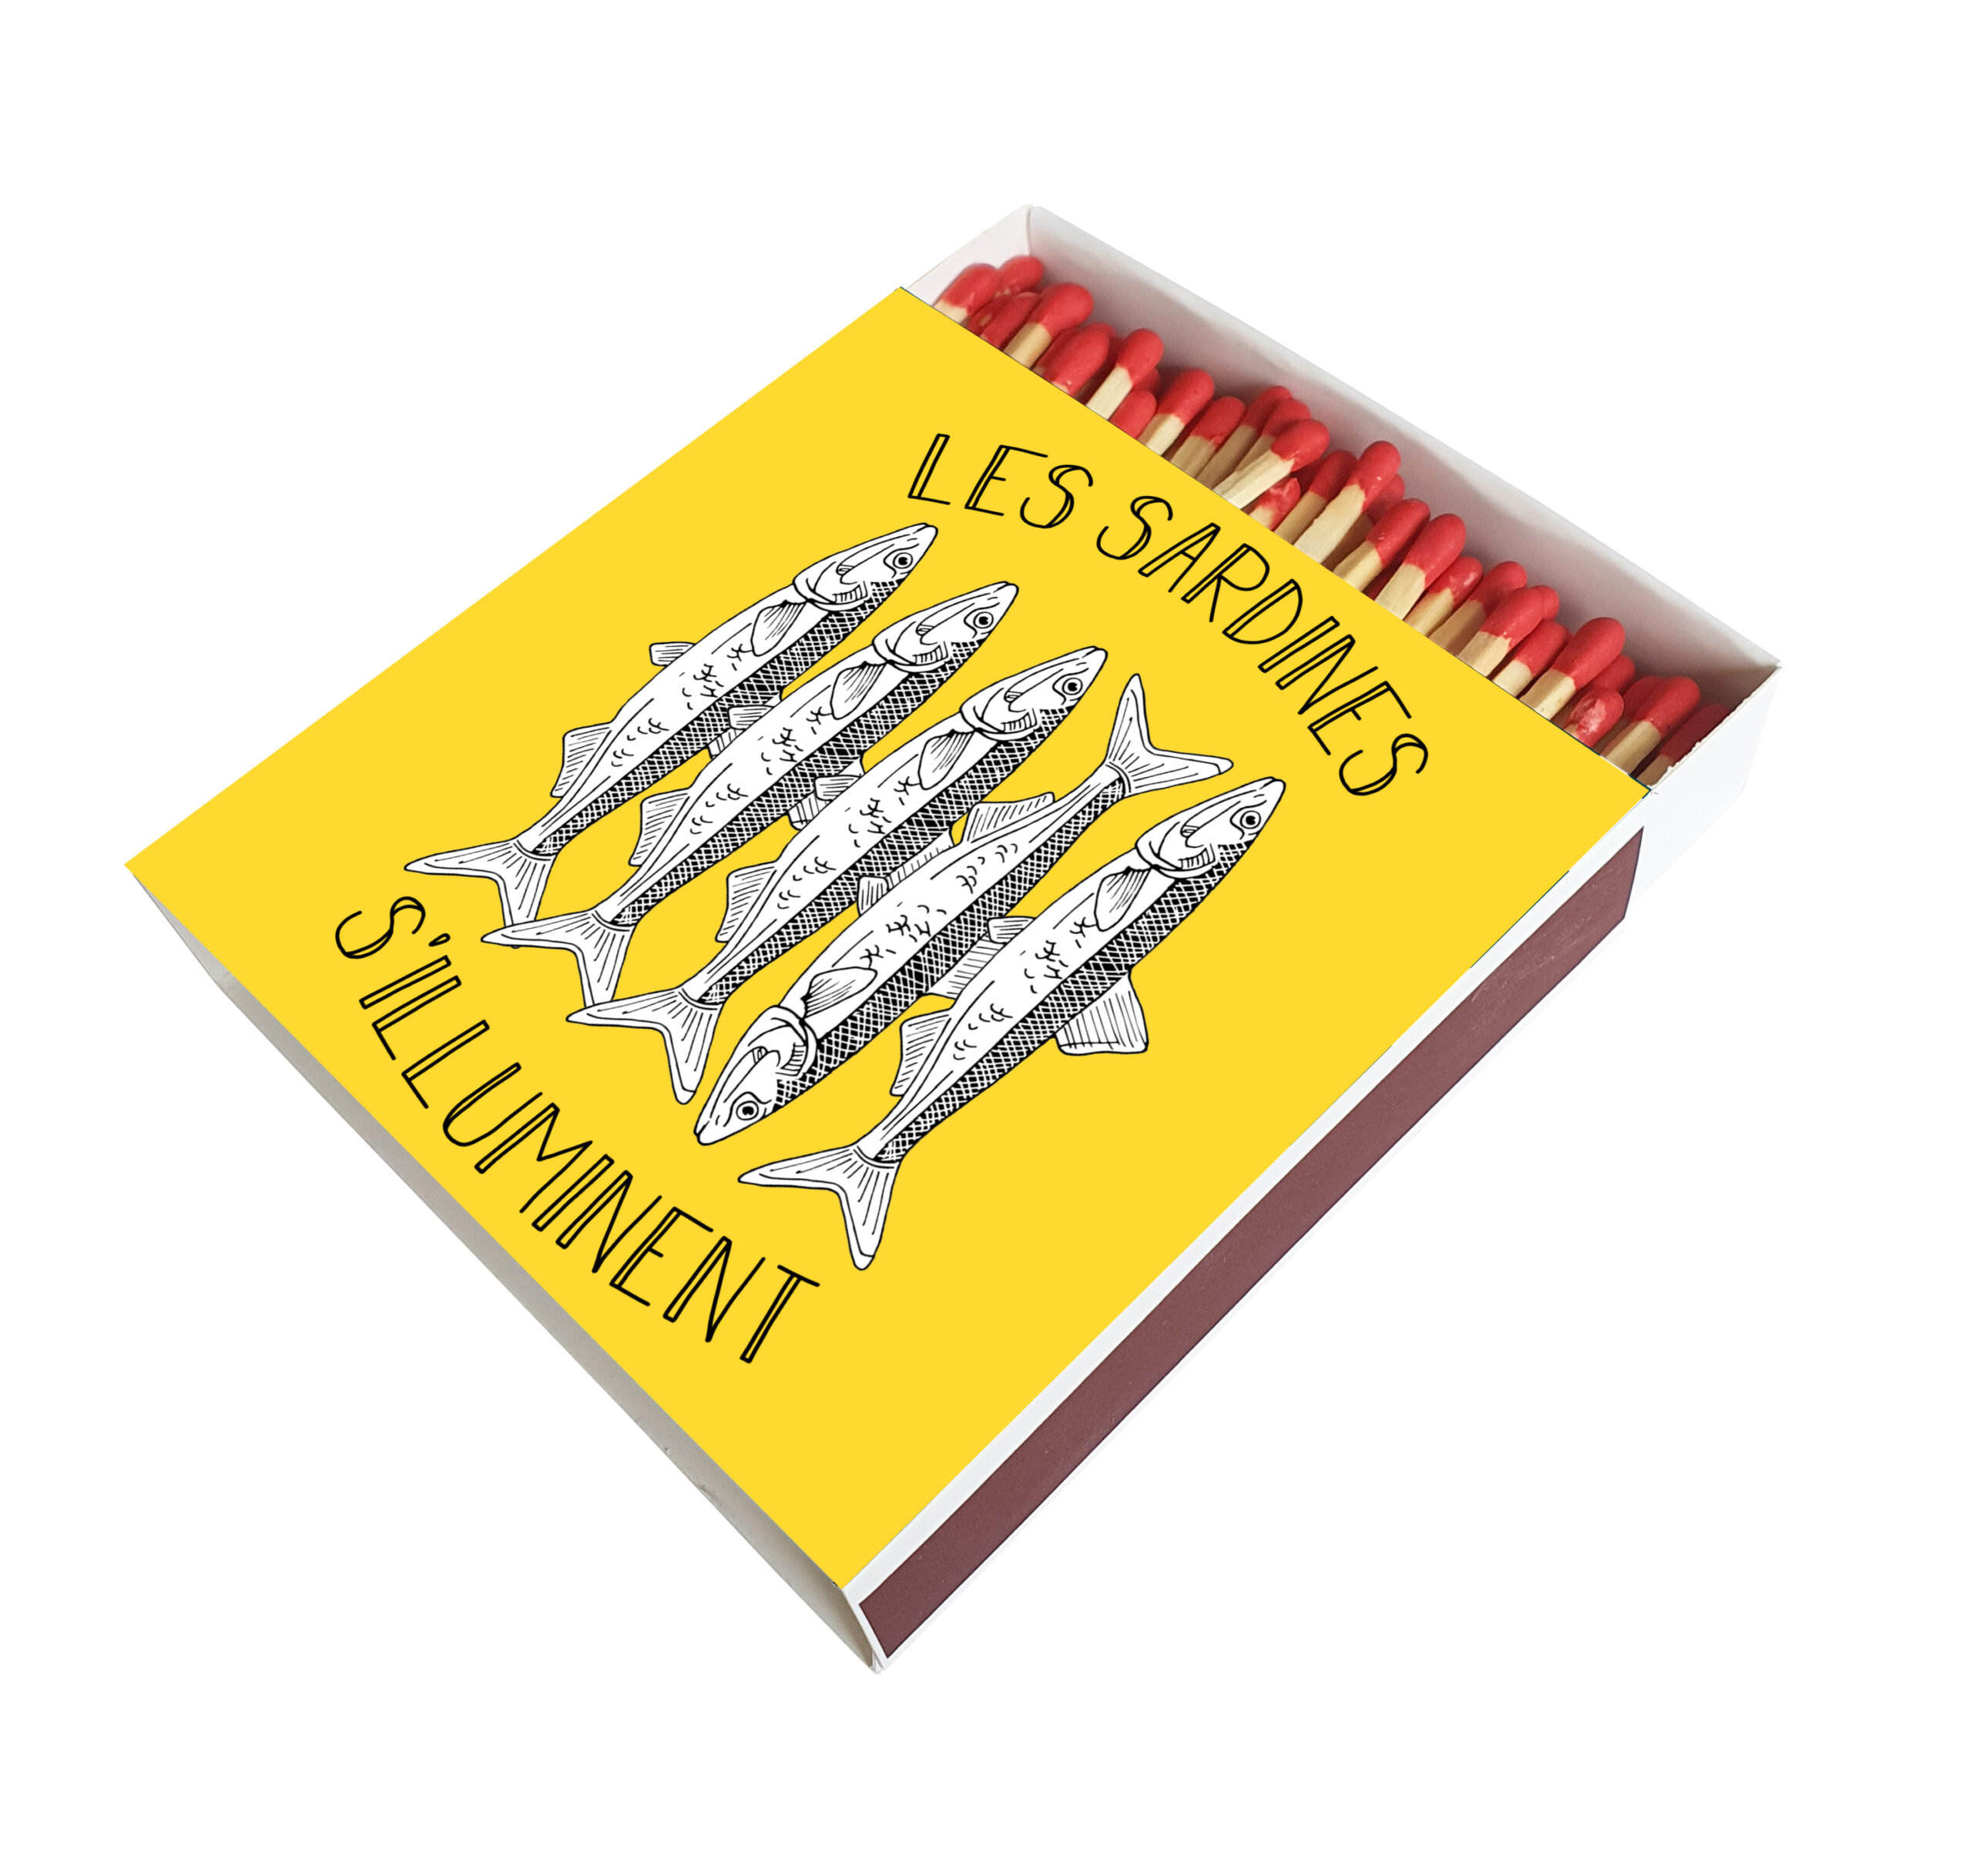 BySphere Box of 125 matches - les sardines s'illuminent